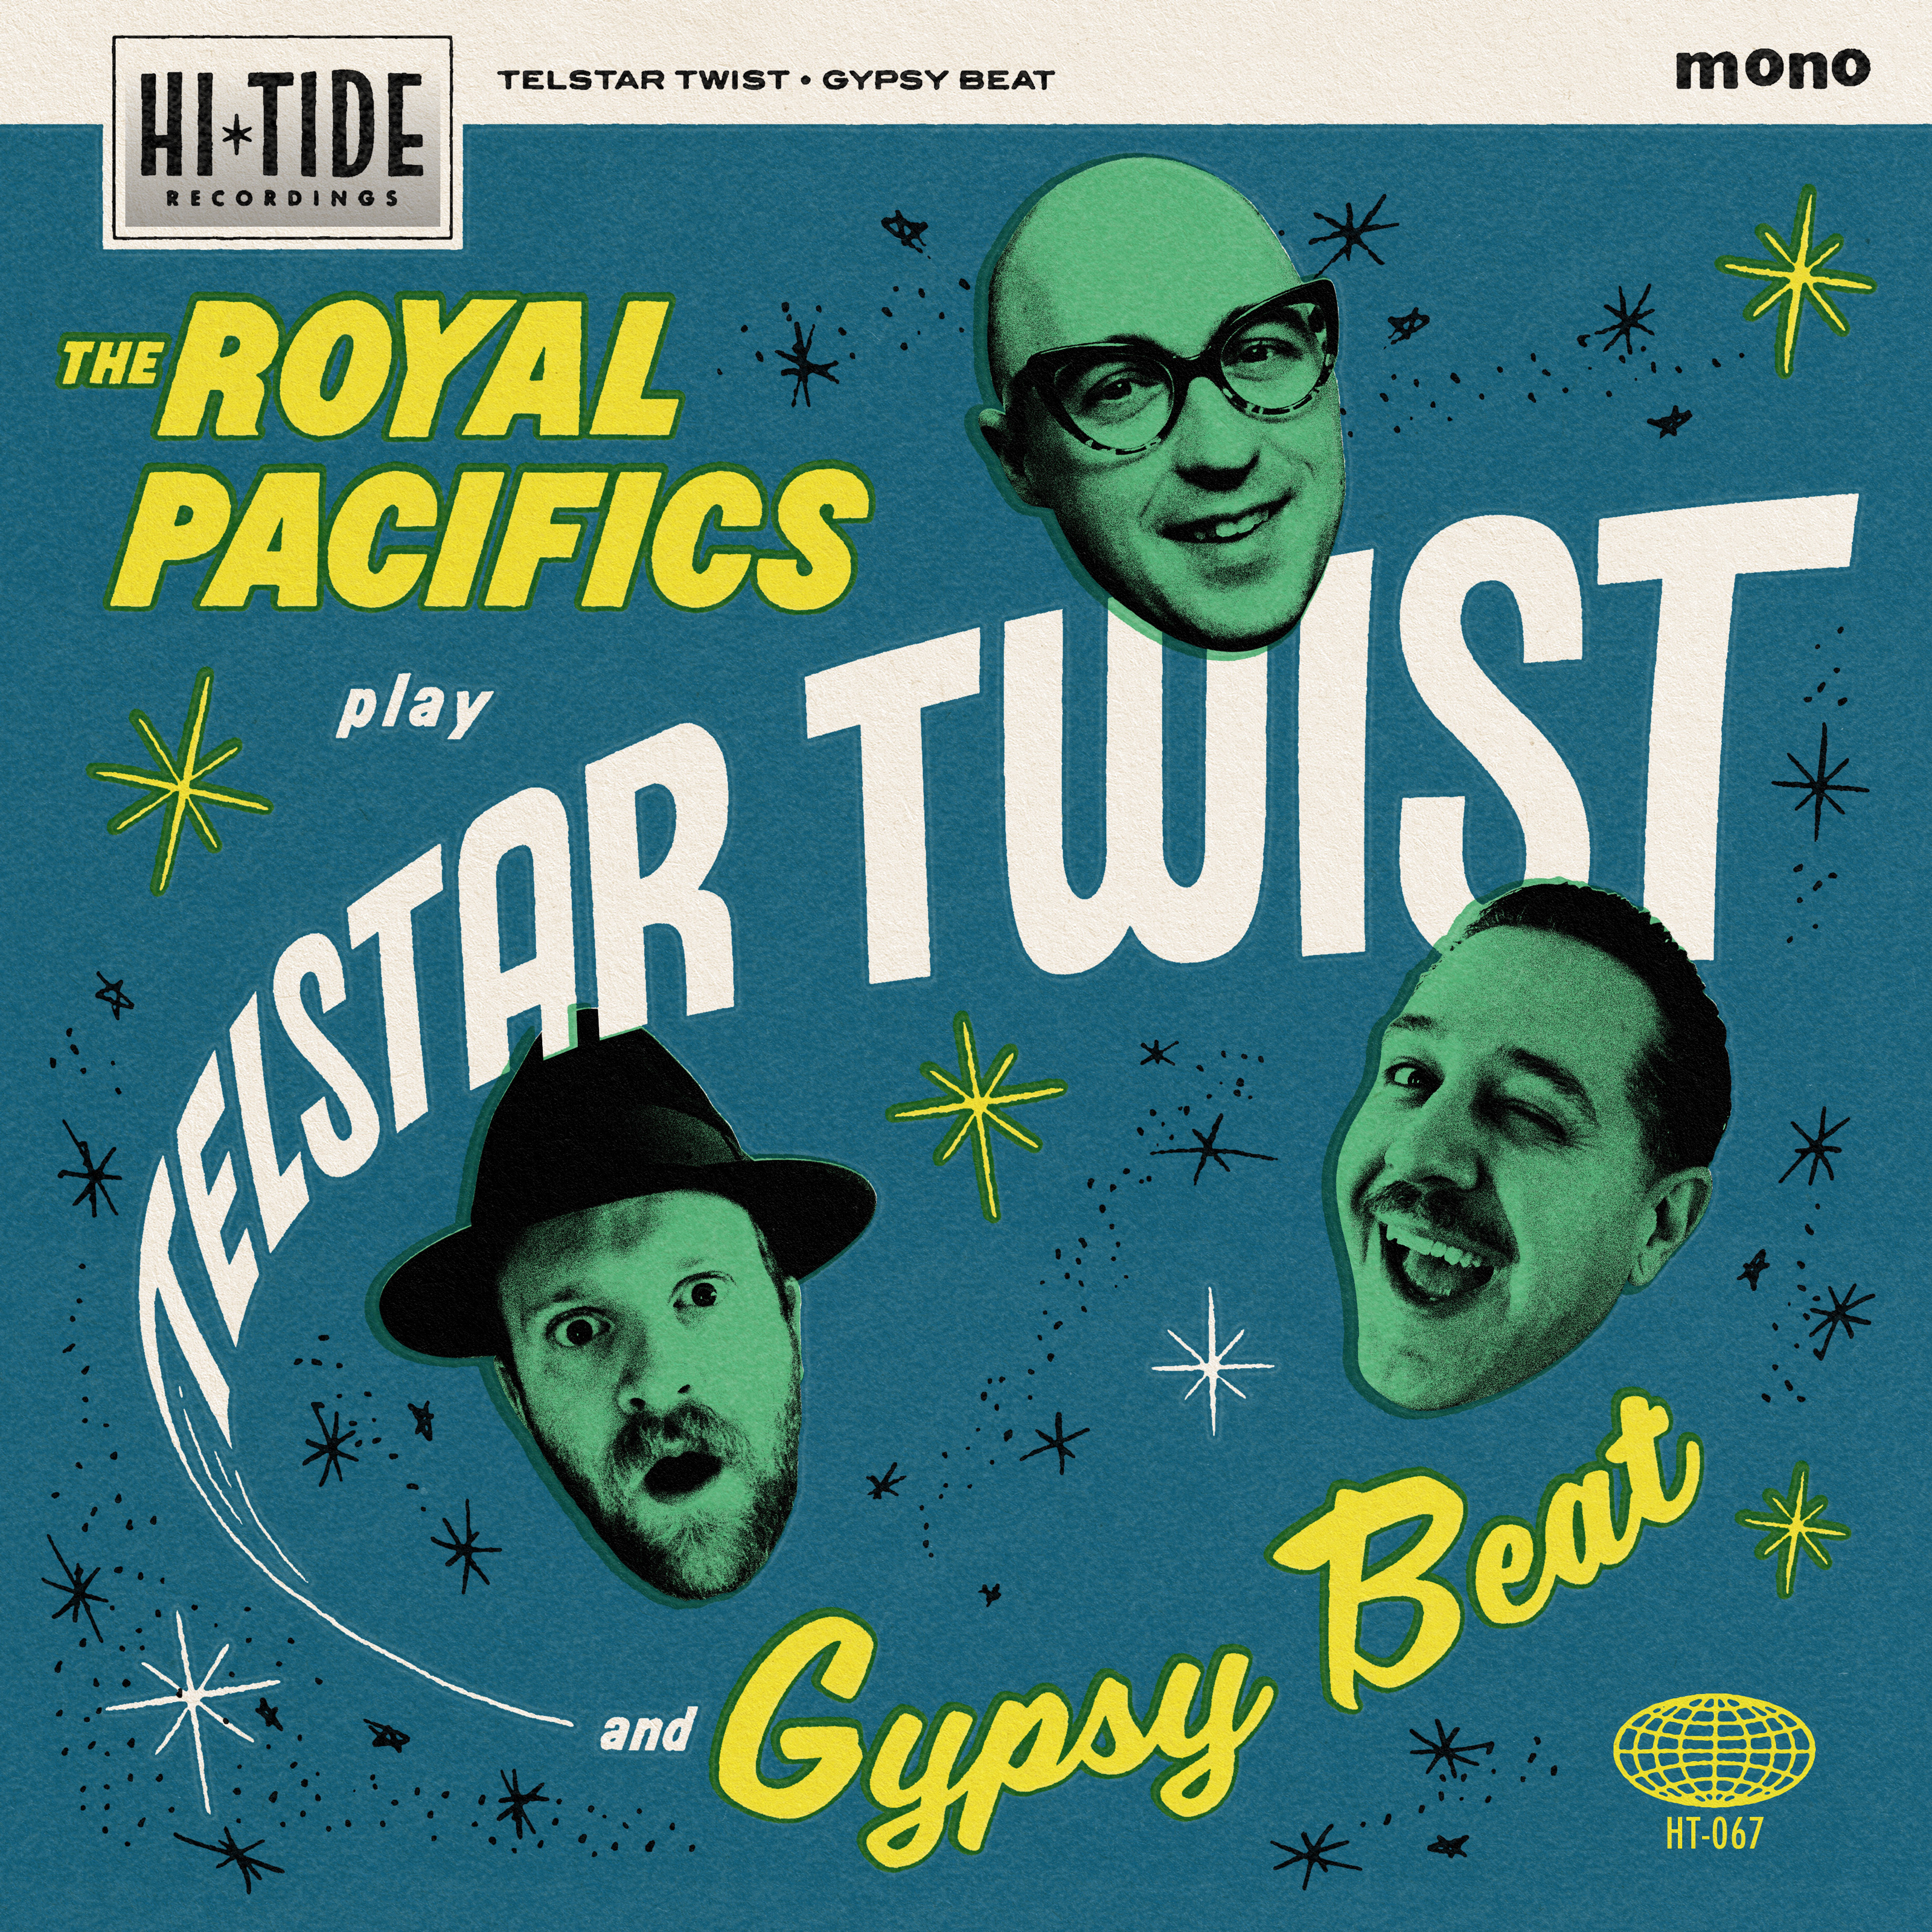 HT-067 "Play Telstar Twist and Gypsy Beat" - The Royal Pacifics | DripFeed.net